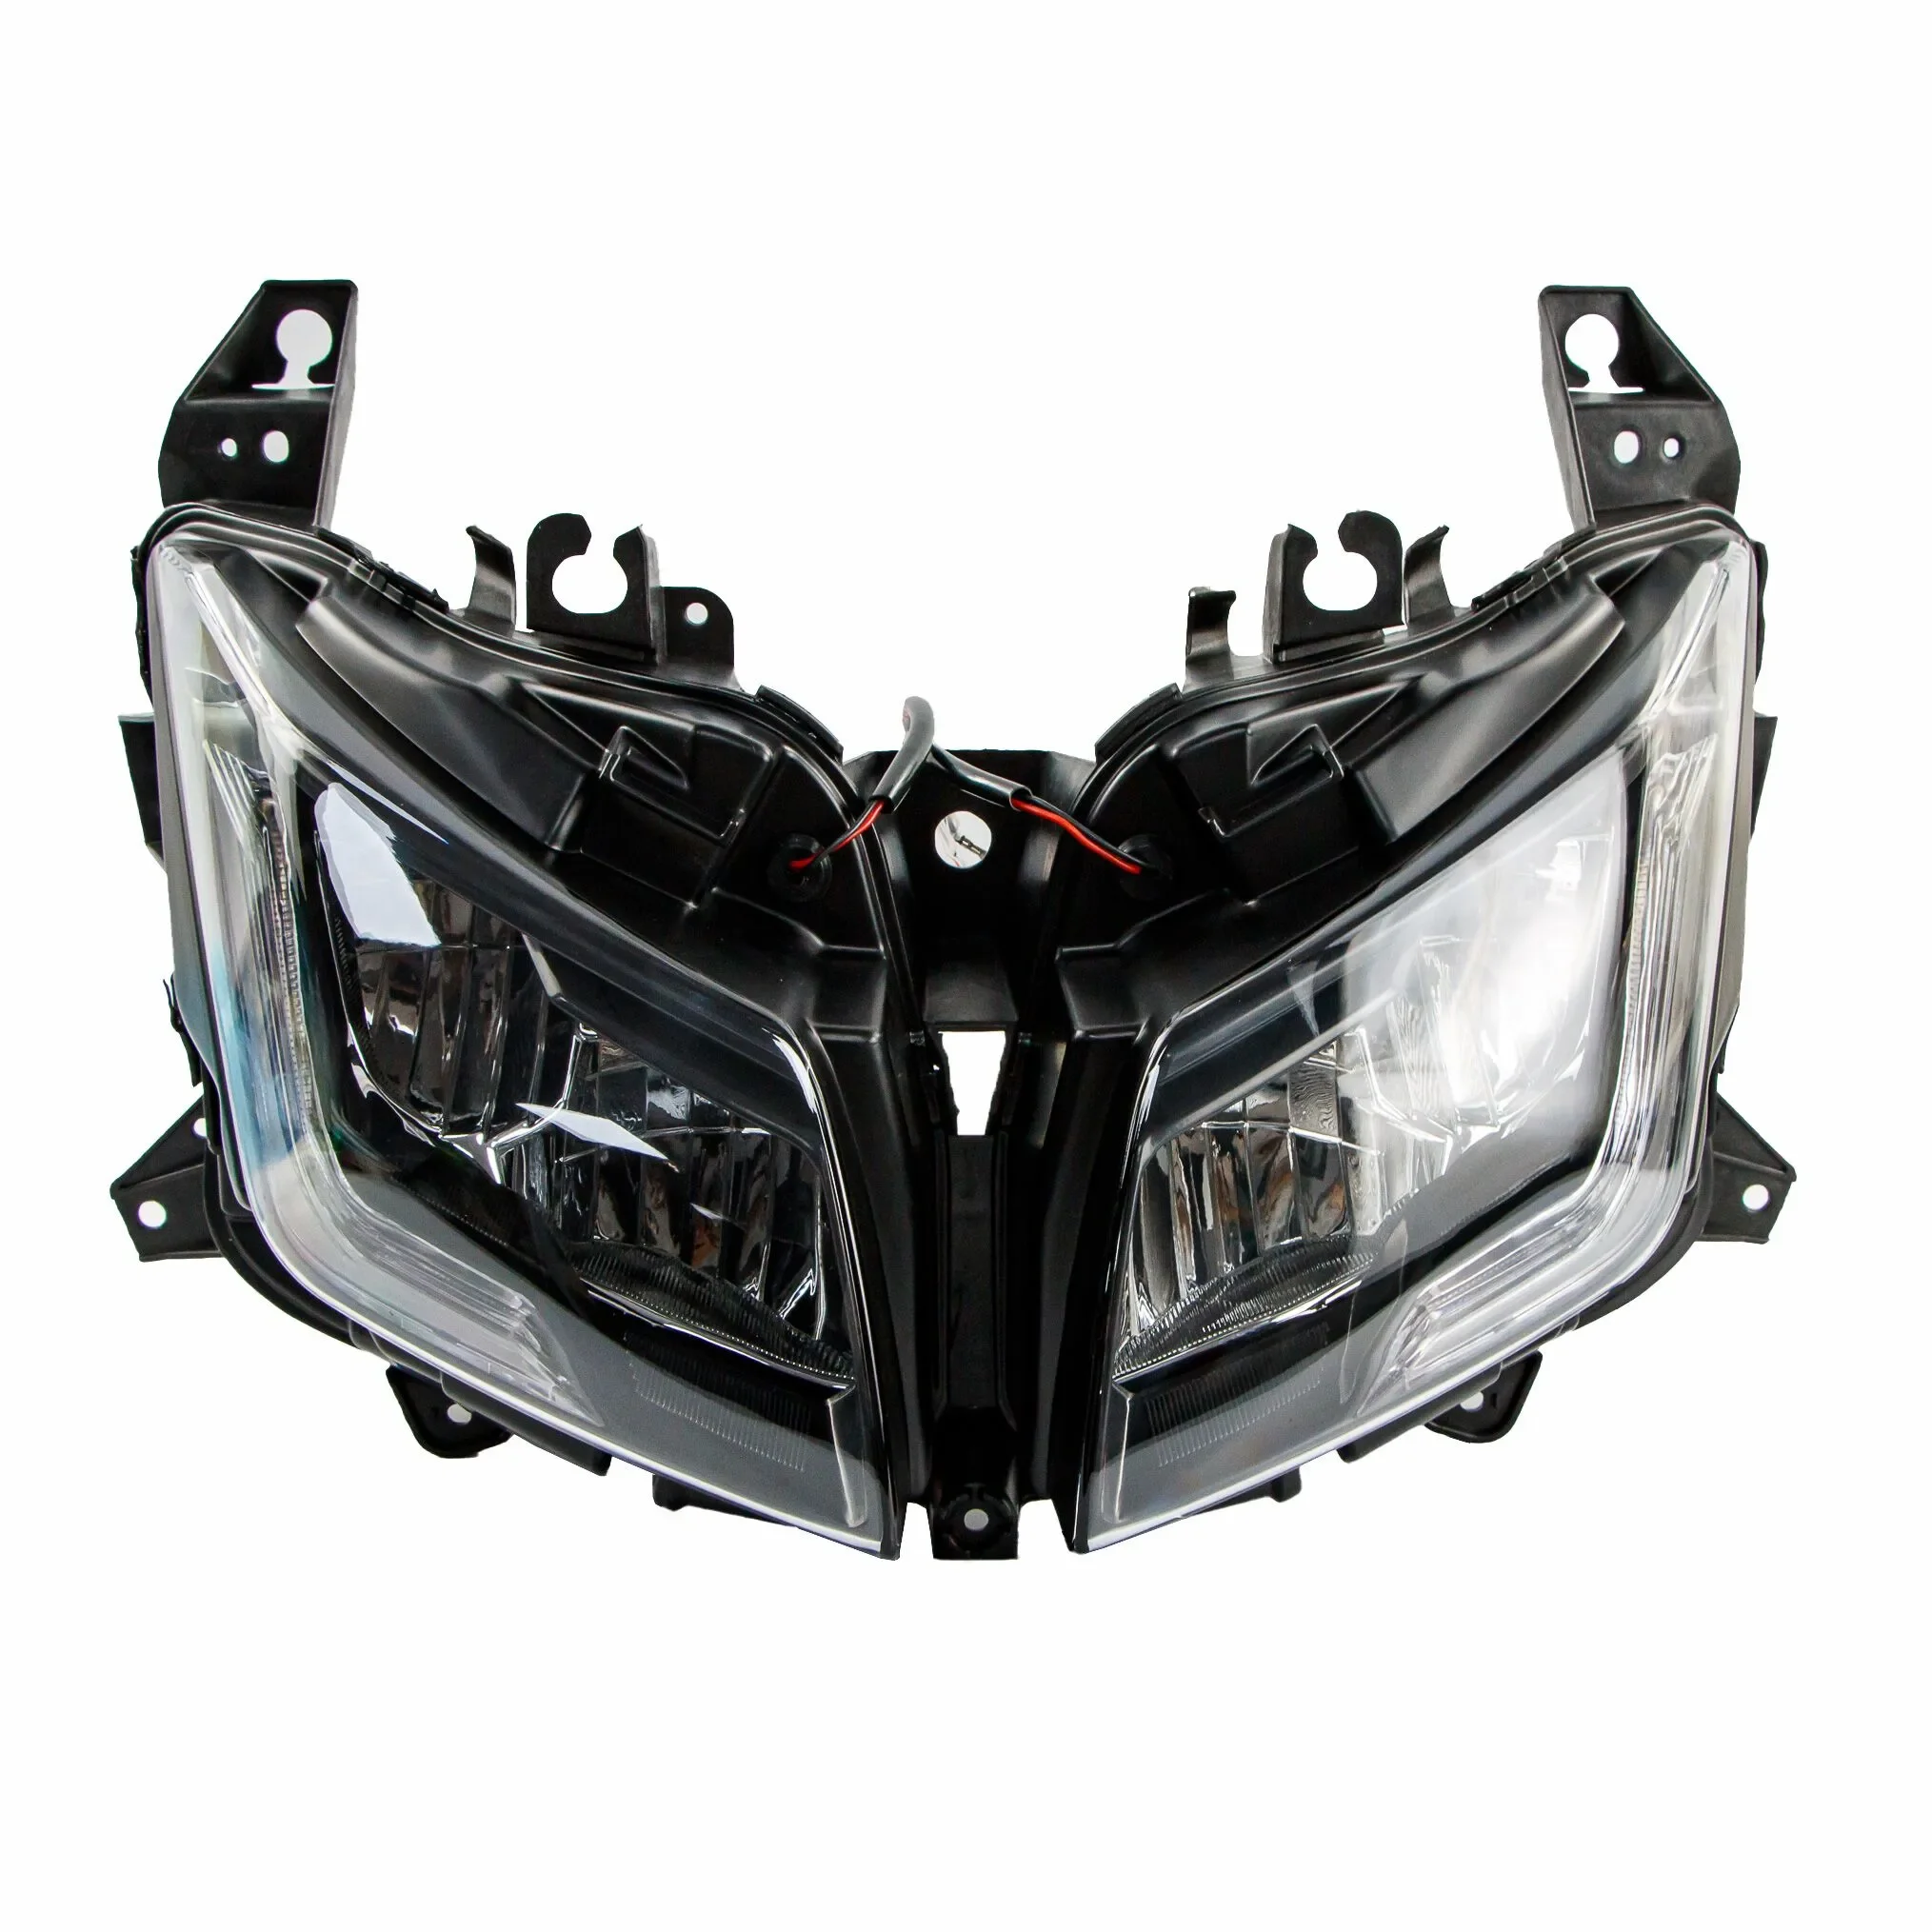 

Motorcycle Headlight Head Light Lamp Headlamp Assembly Housing Kit For YAMAHA T-MAX530 TMAX 530 TMAX530 2015 2016 T-MAX 530